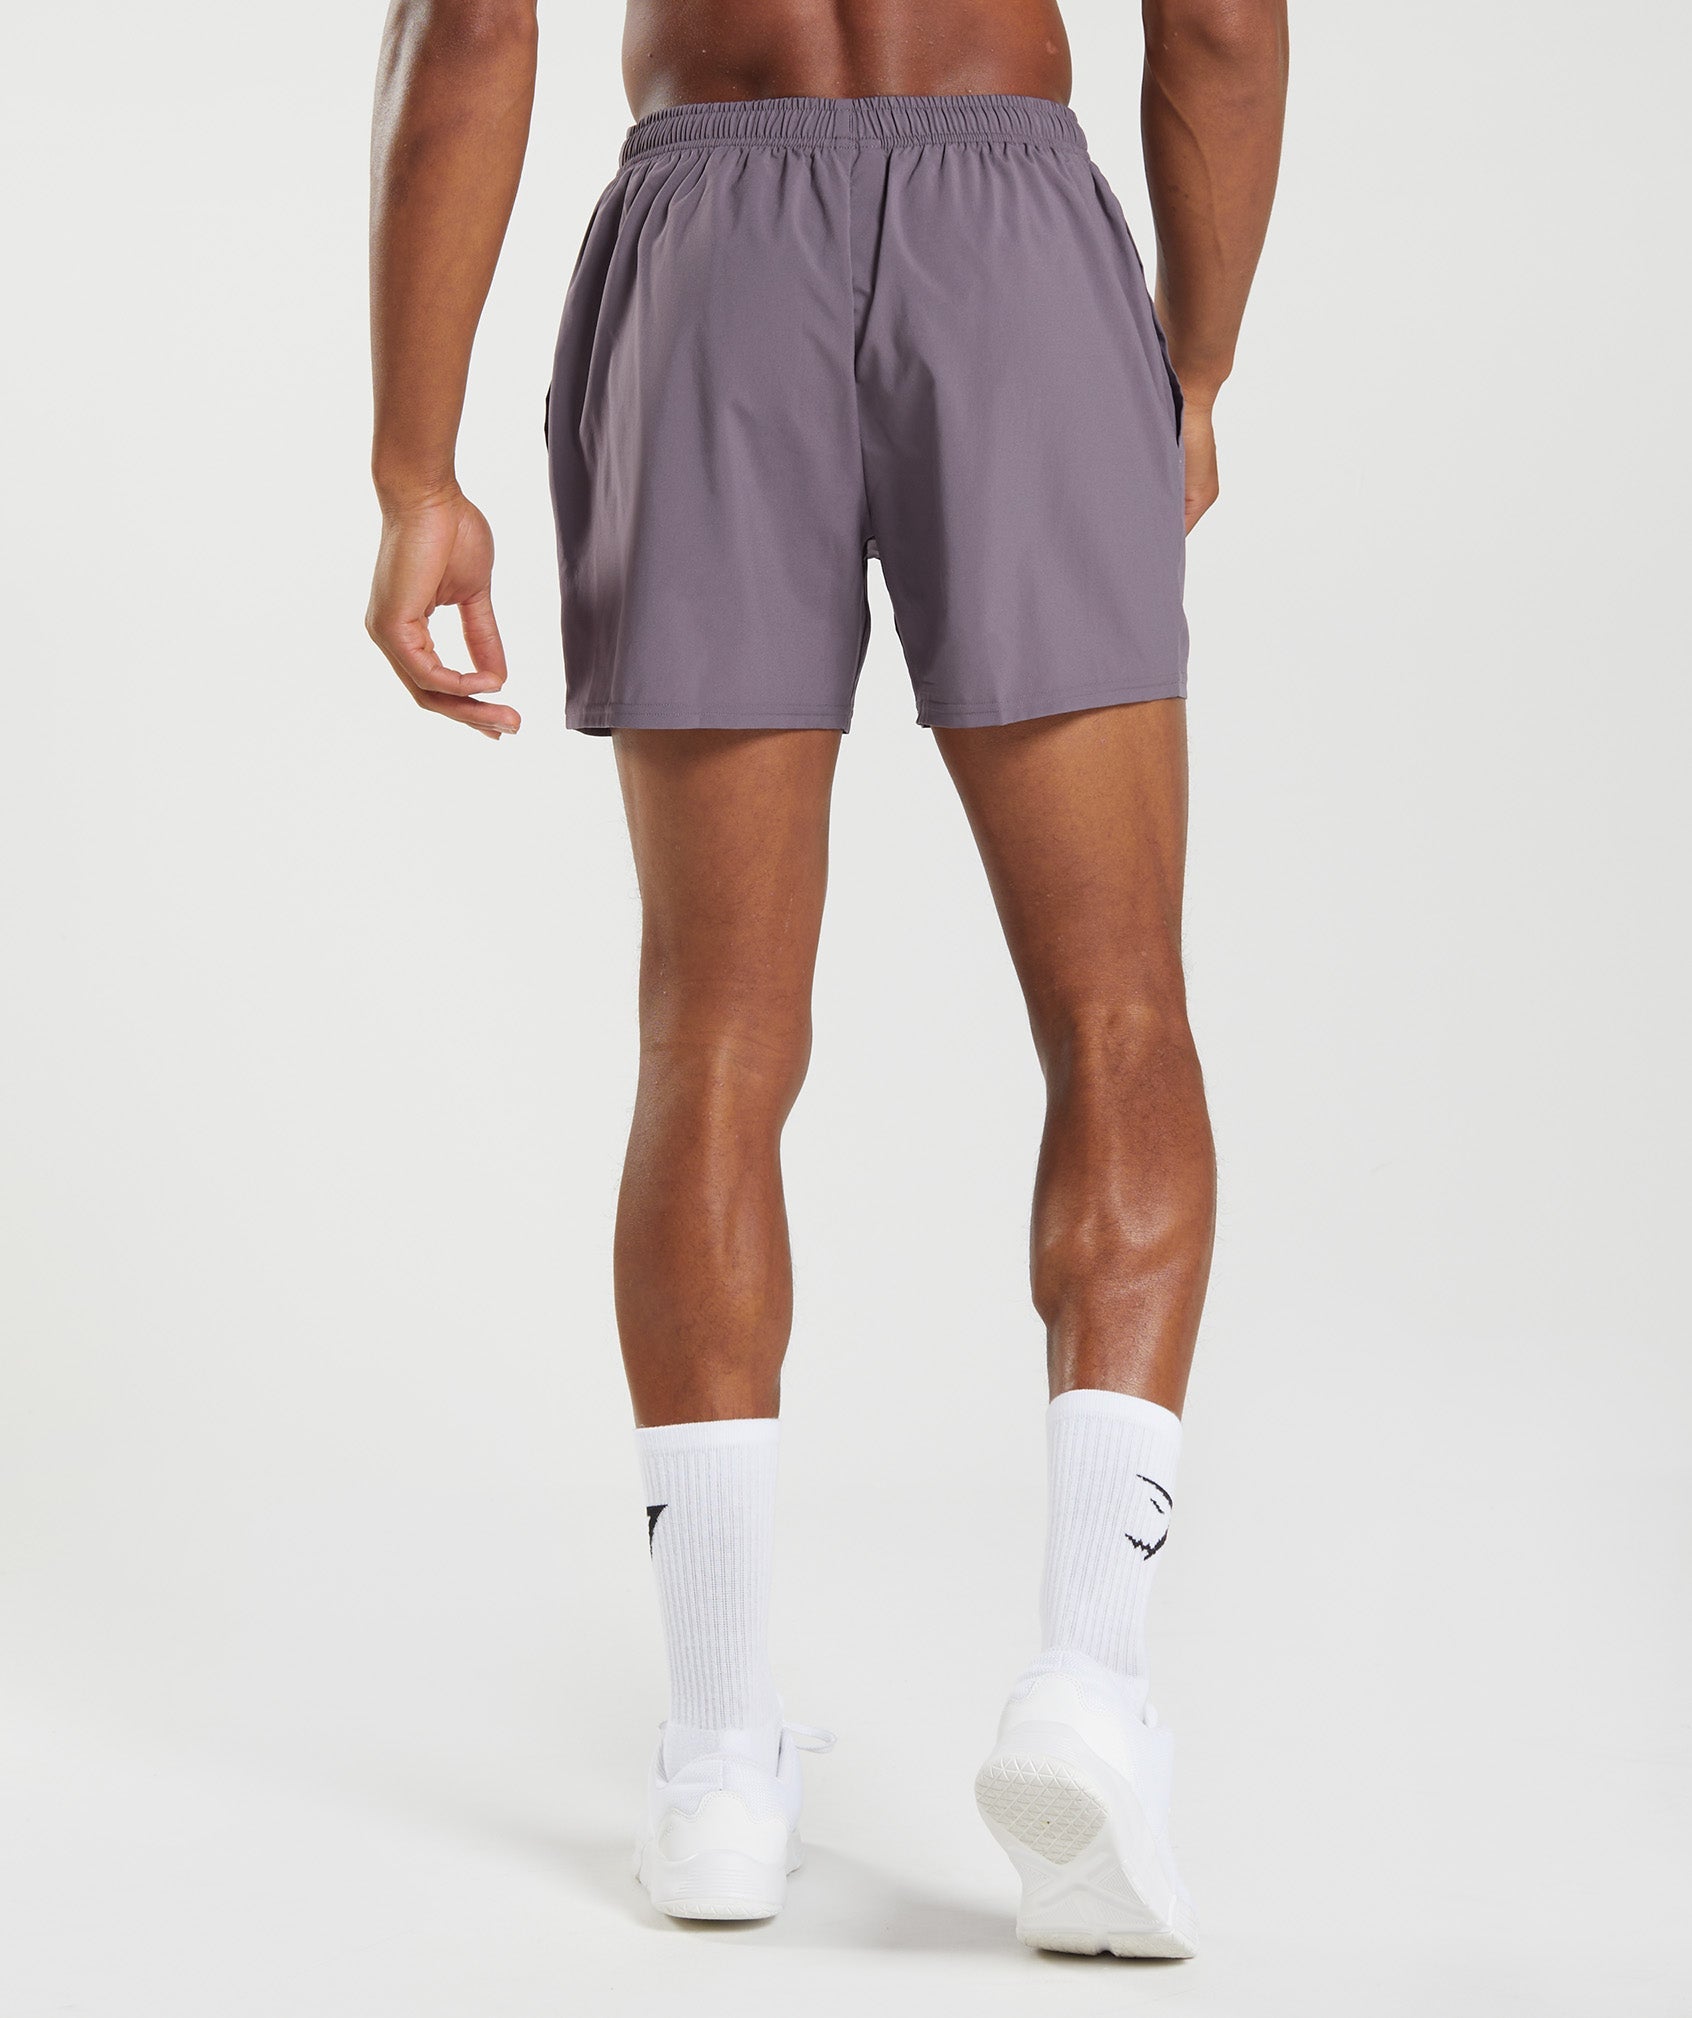 Gymshark Arrival 5 Shorts - Musk Lilac